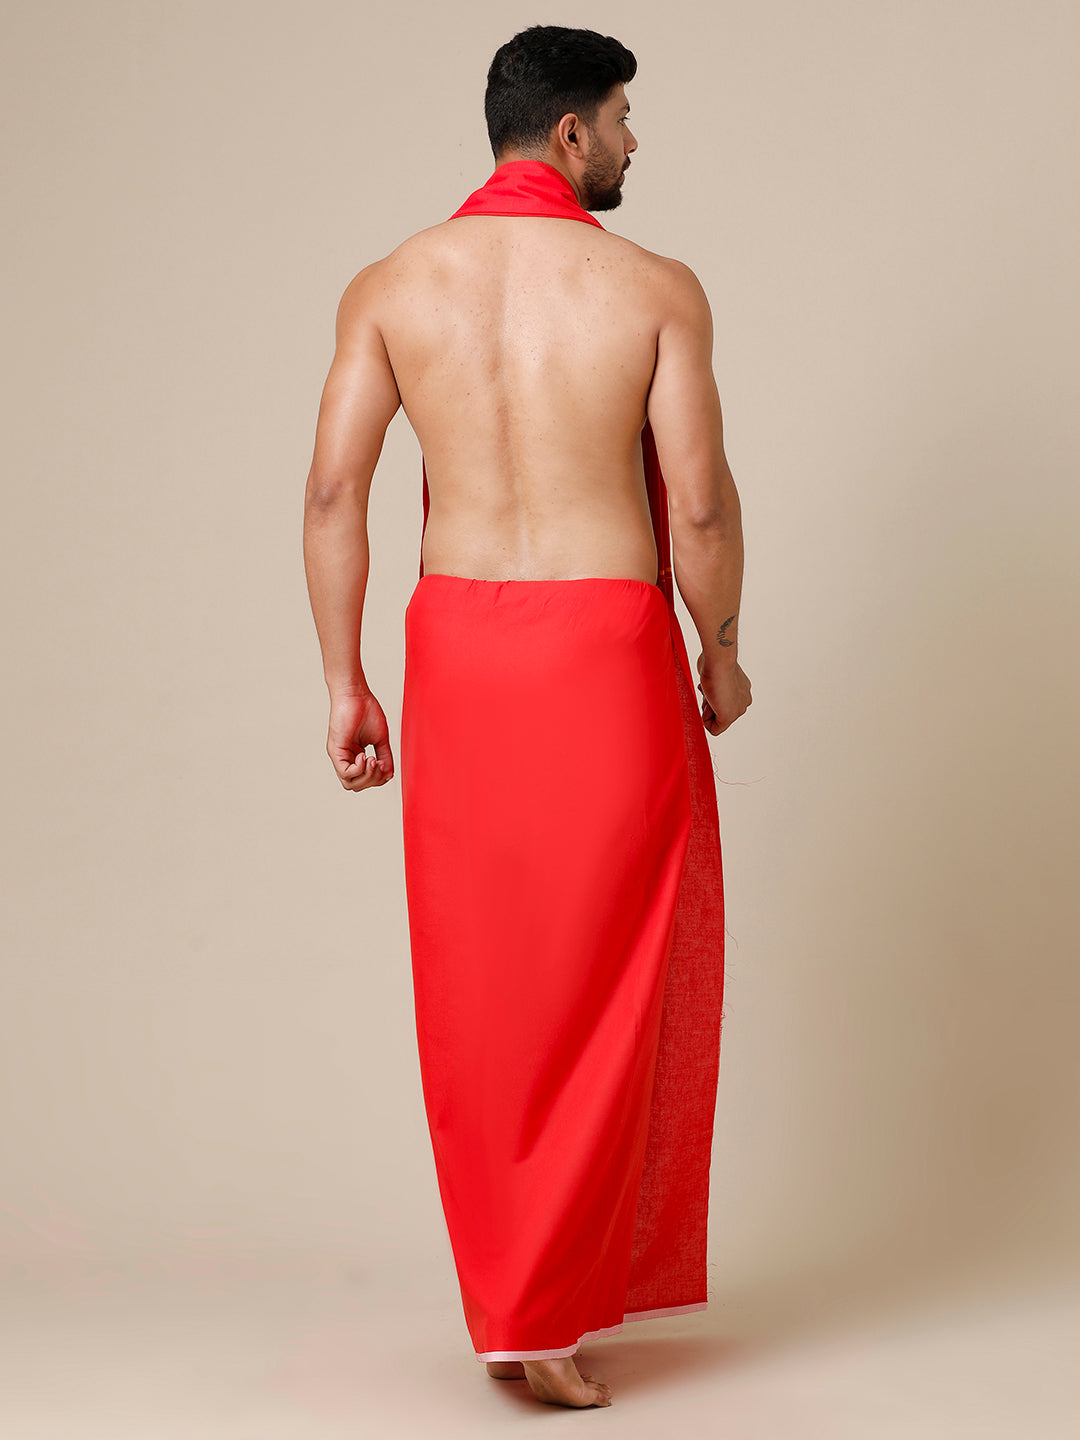 Mens Devotional Red Dhoti with Fancy Border Enrich Colour 11 (VL POPPY)